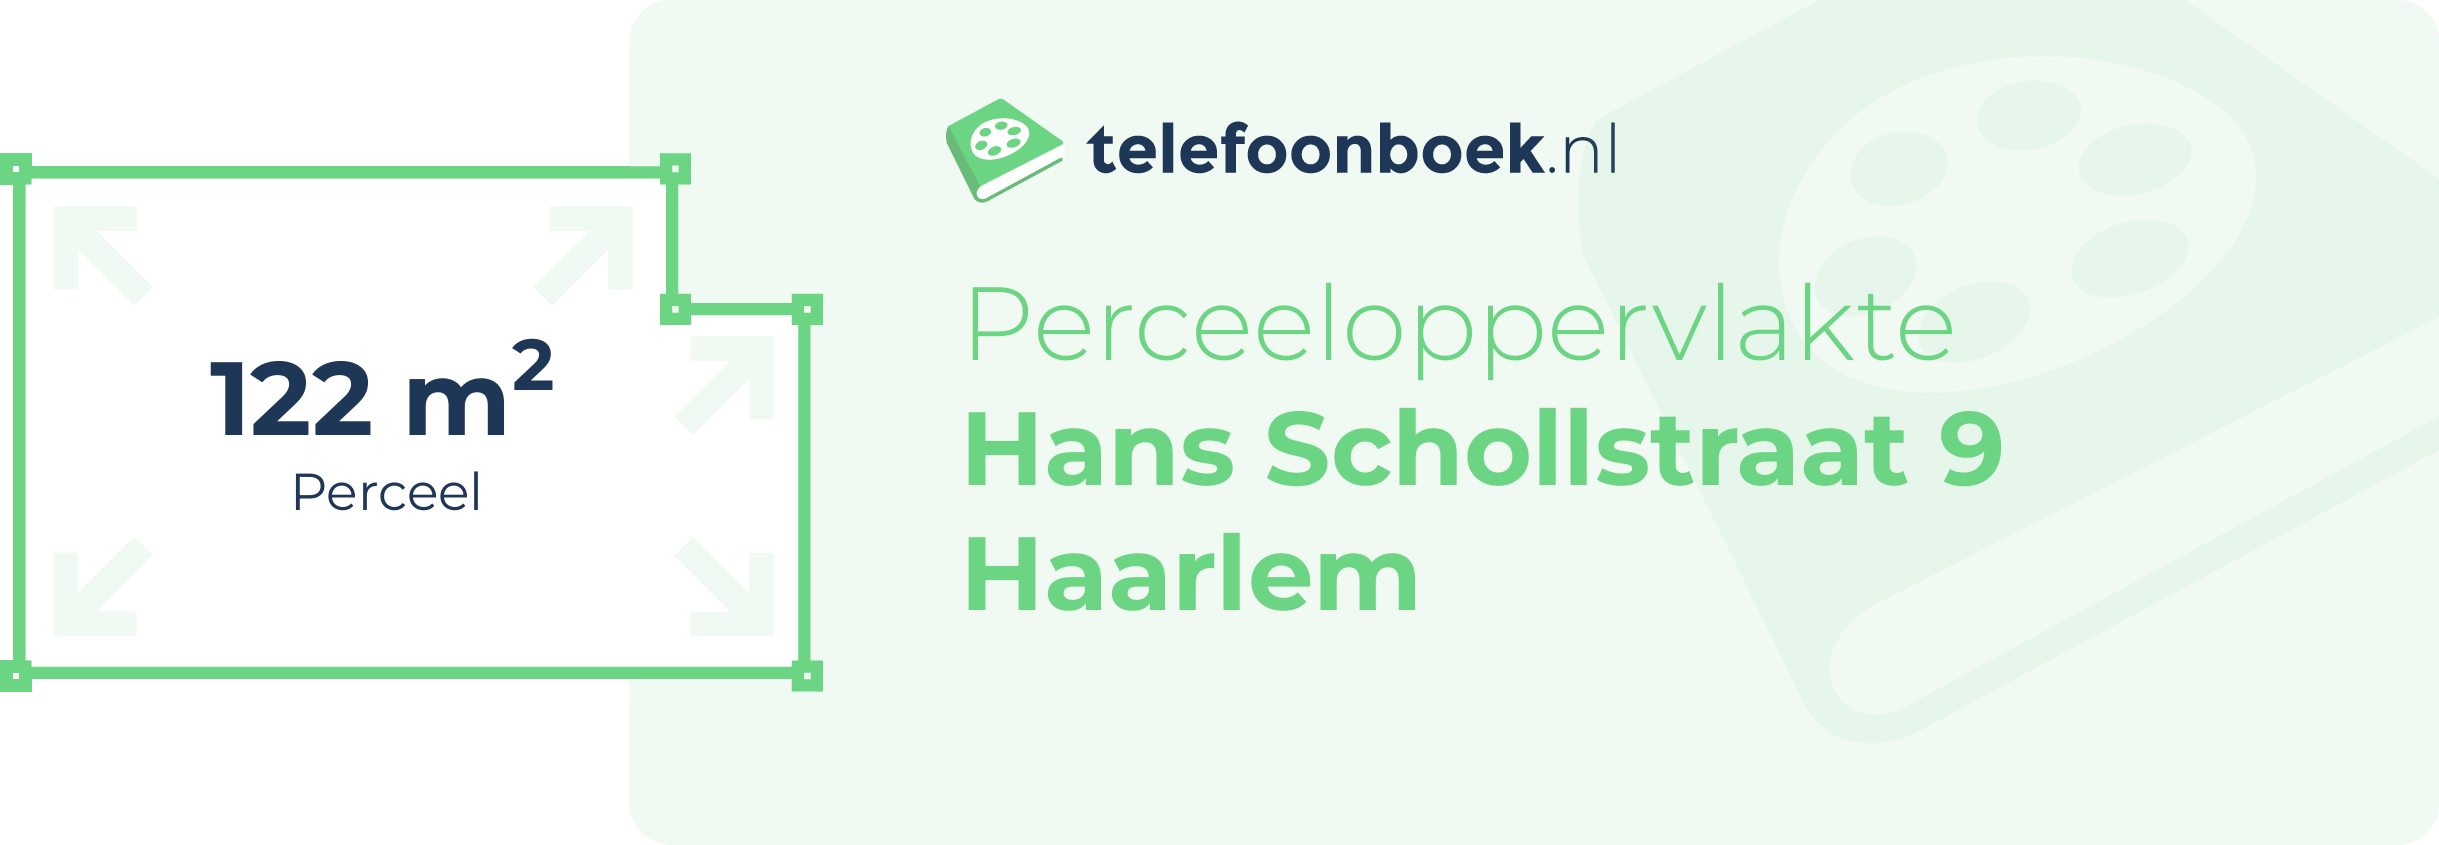 Perceeloppervlakte Hans Schollstraat 9 Haarlem